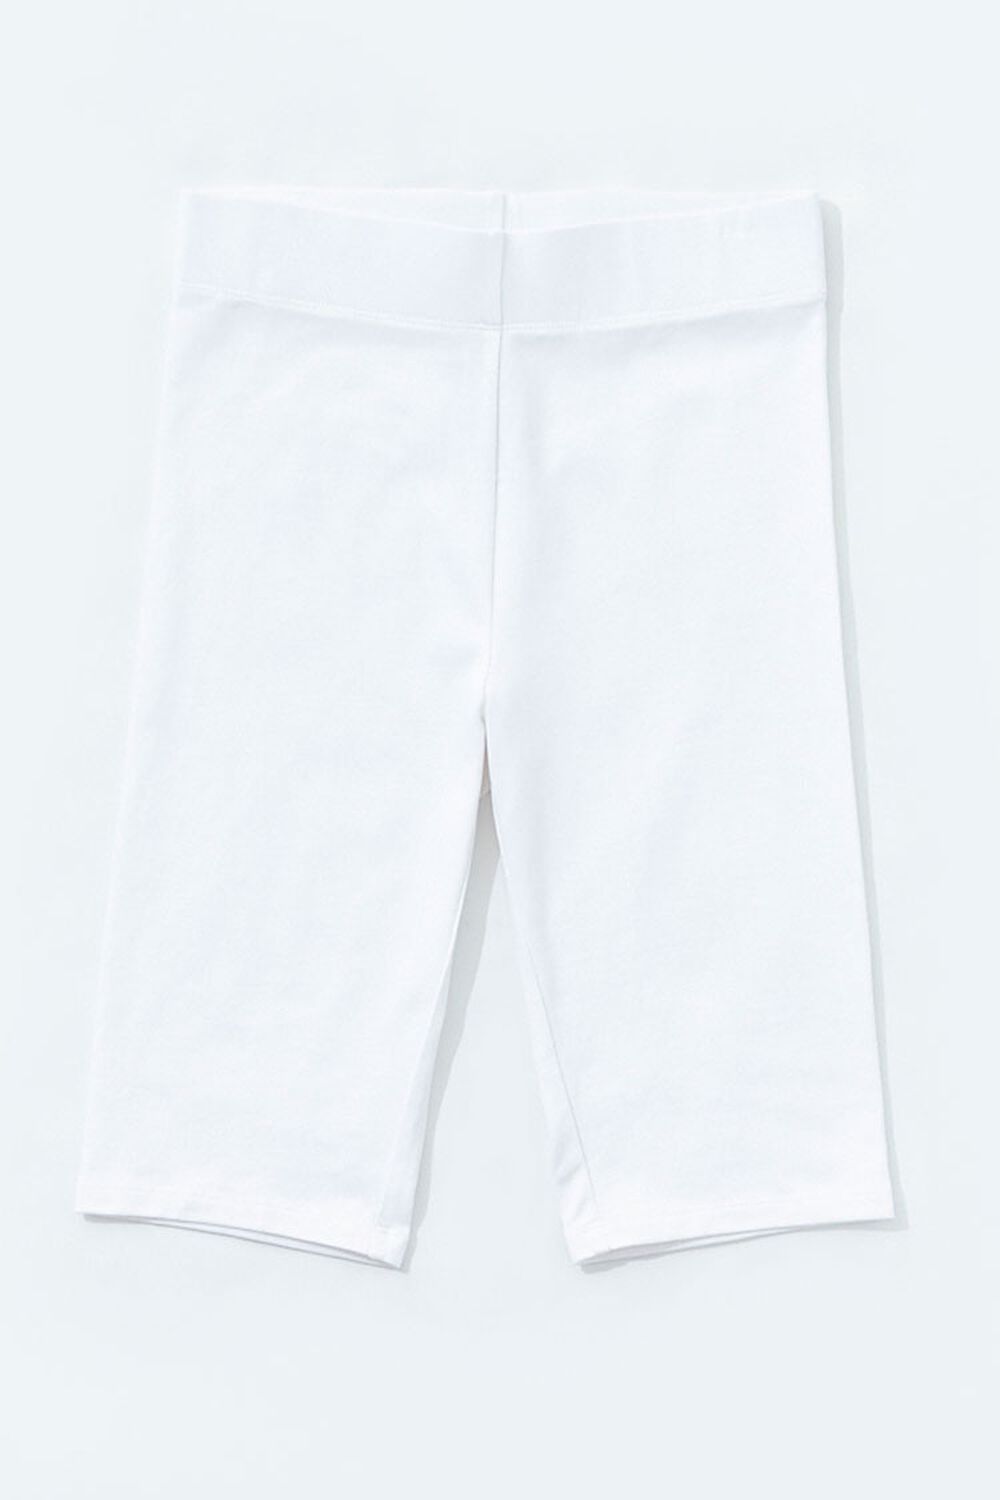 WHITE 11-Inch High-Rise Biker Shorts, image 1